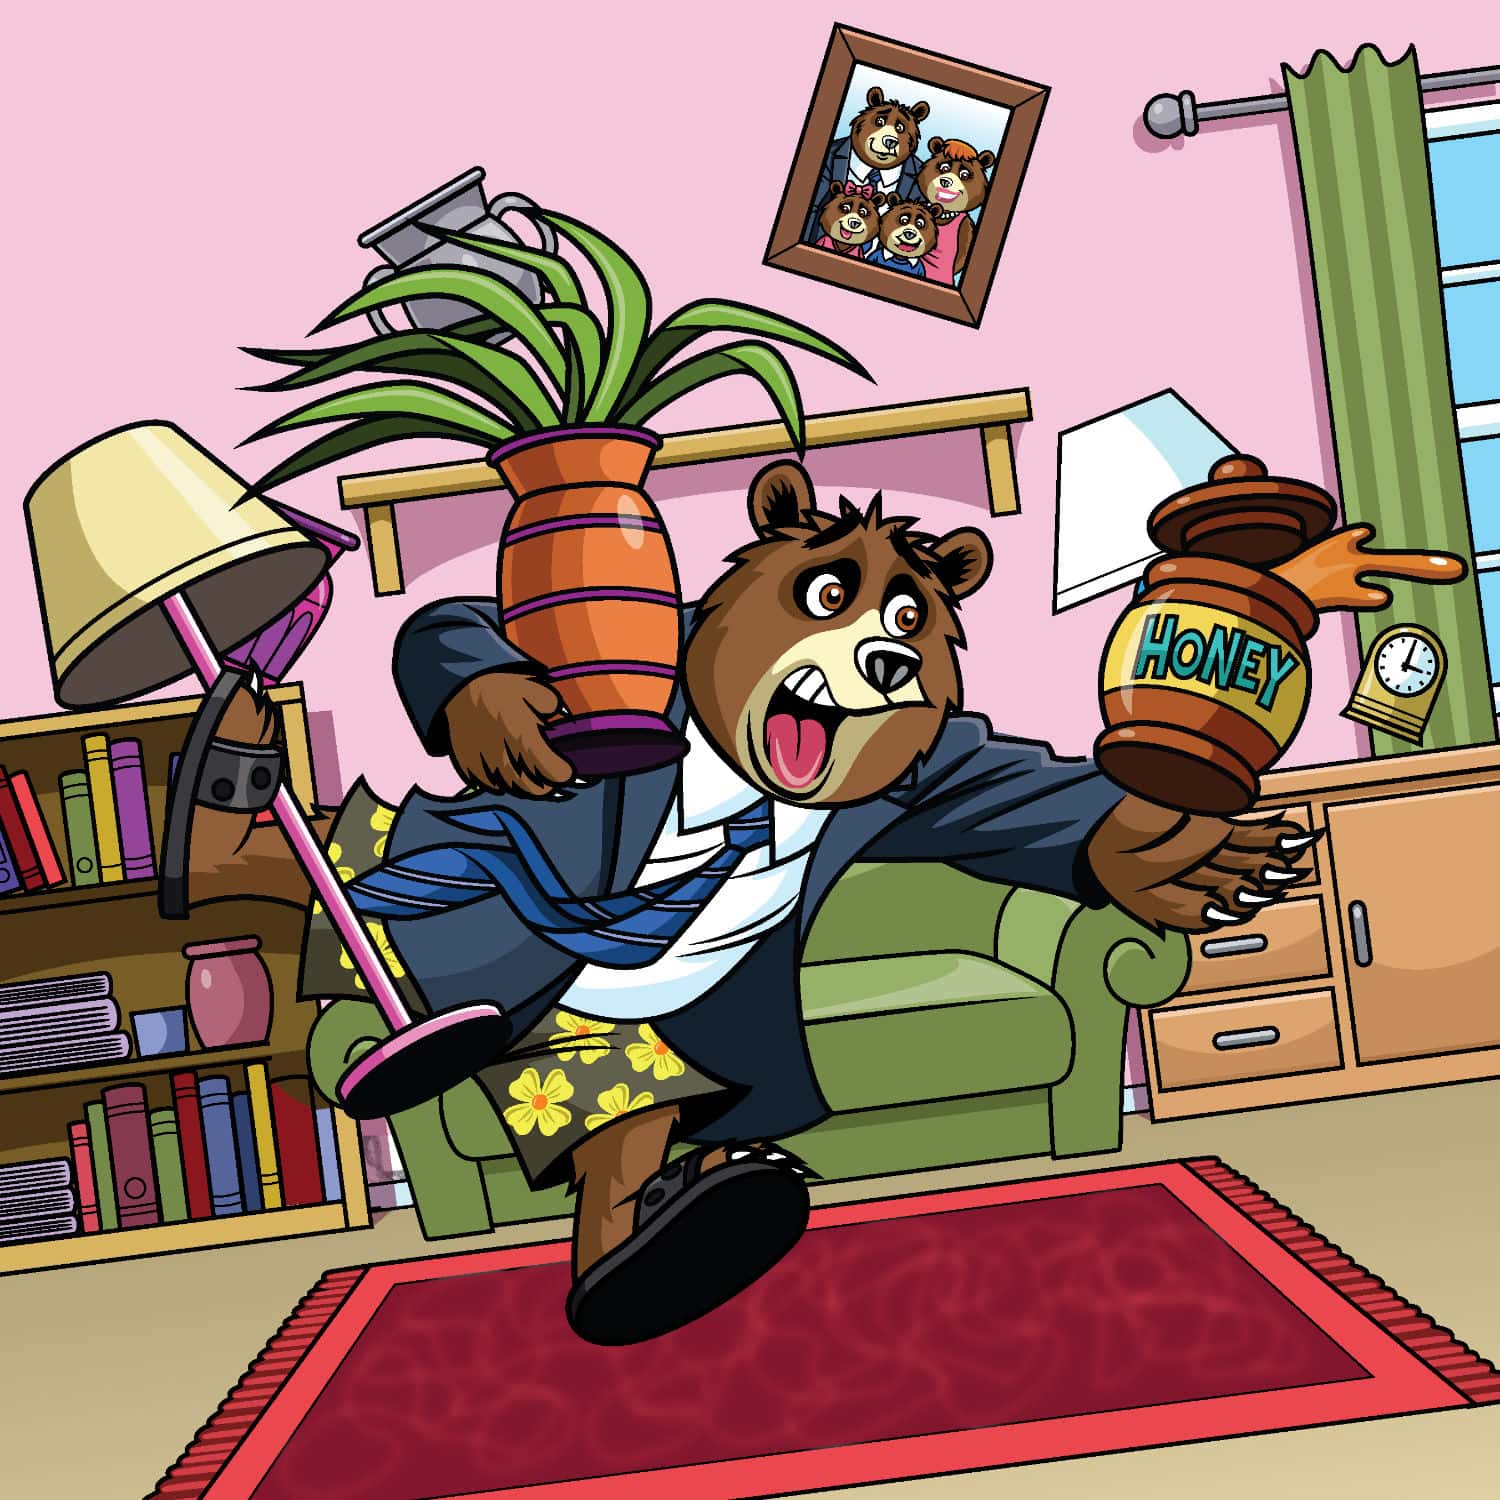 Illustration of a bear inside a house during an earthquake